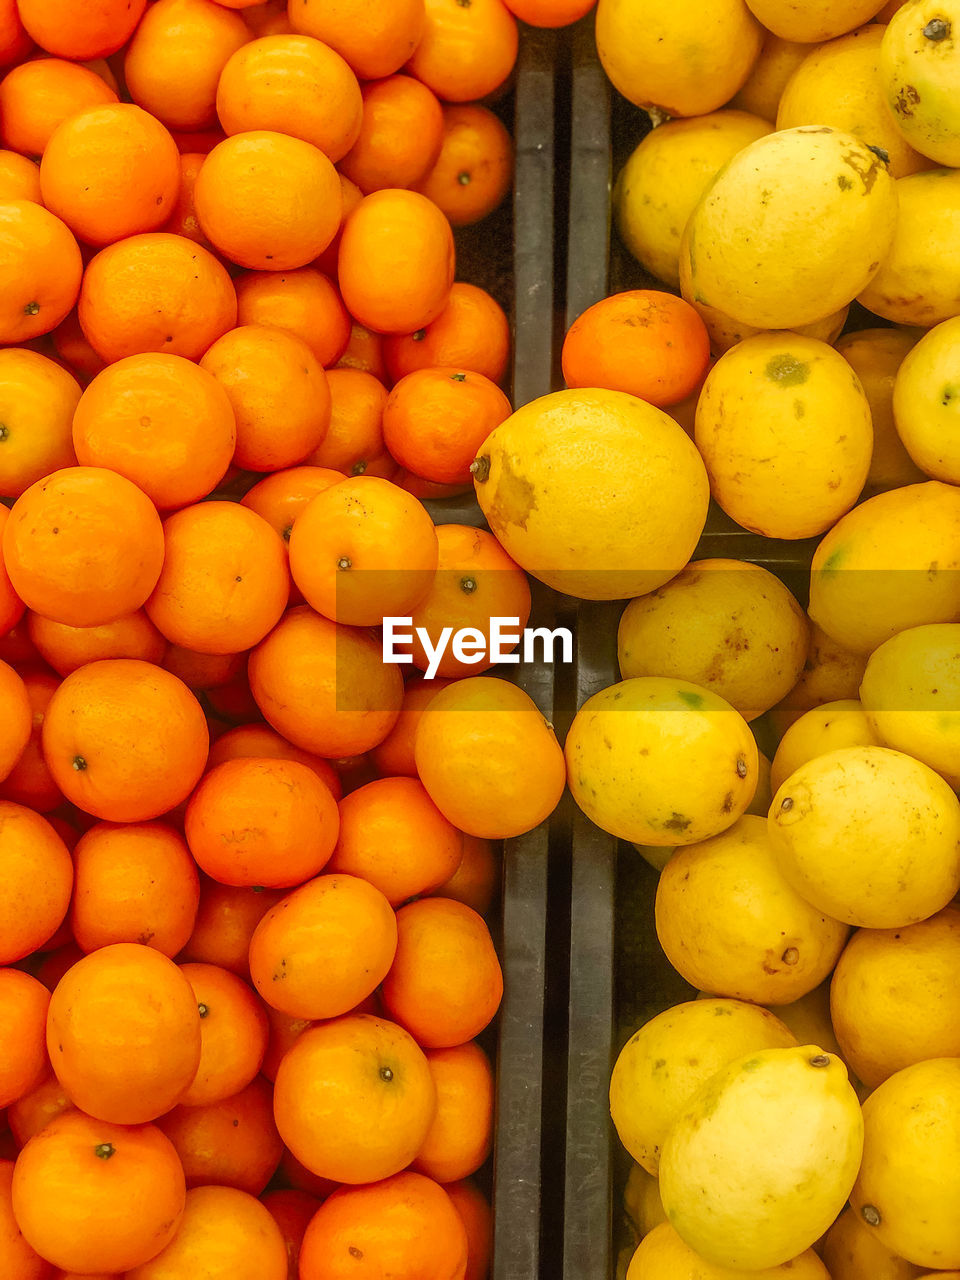 Close-up of oranges and lemon